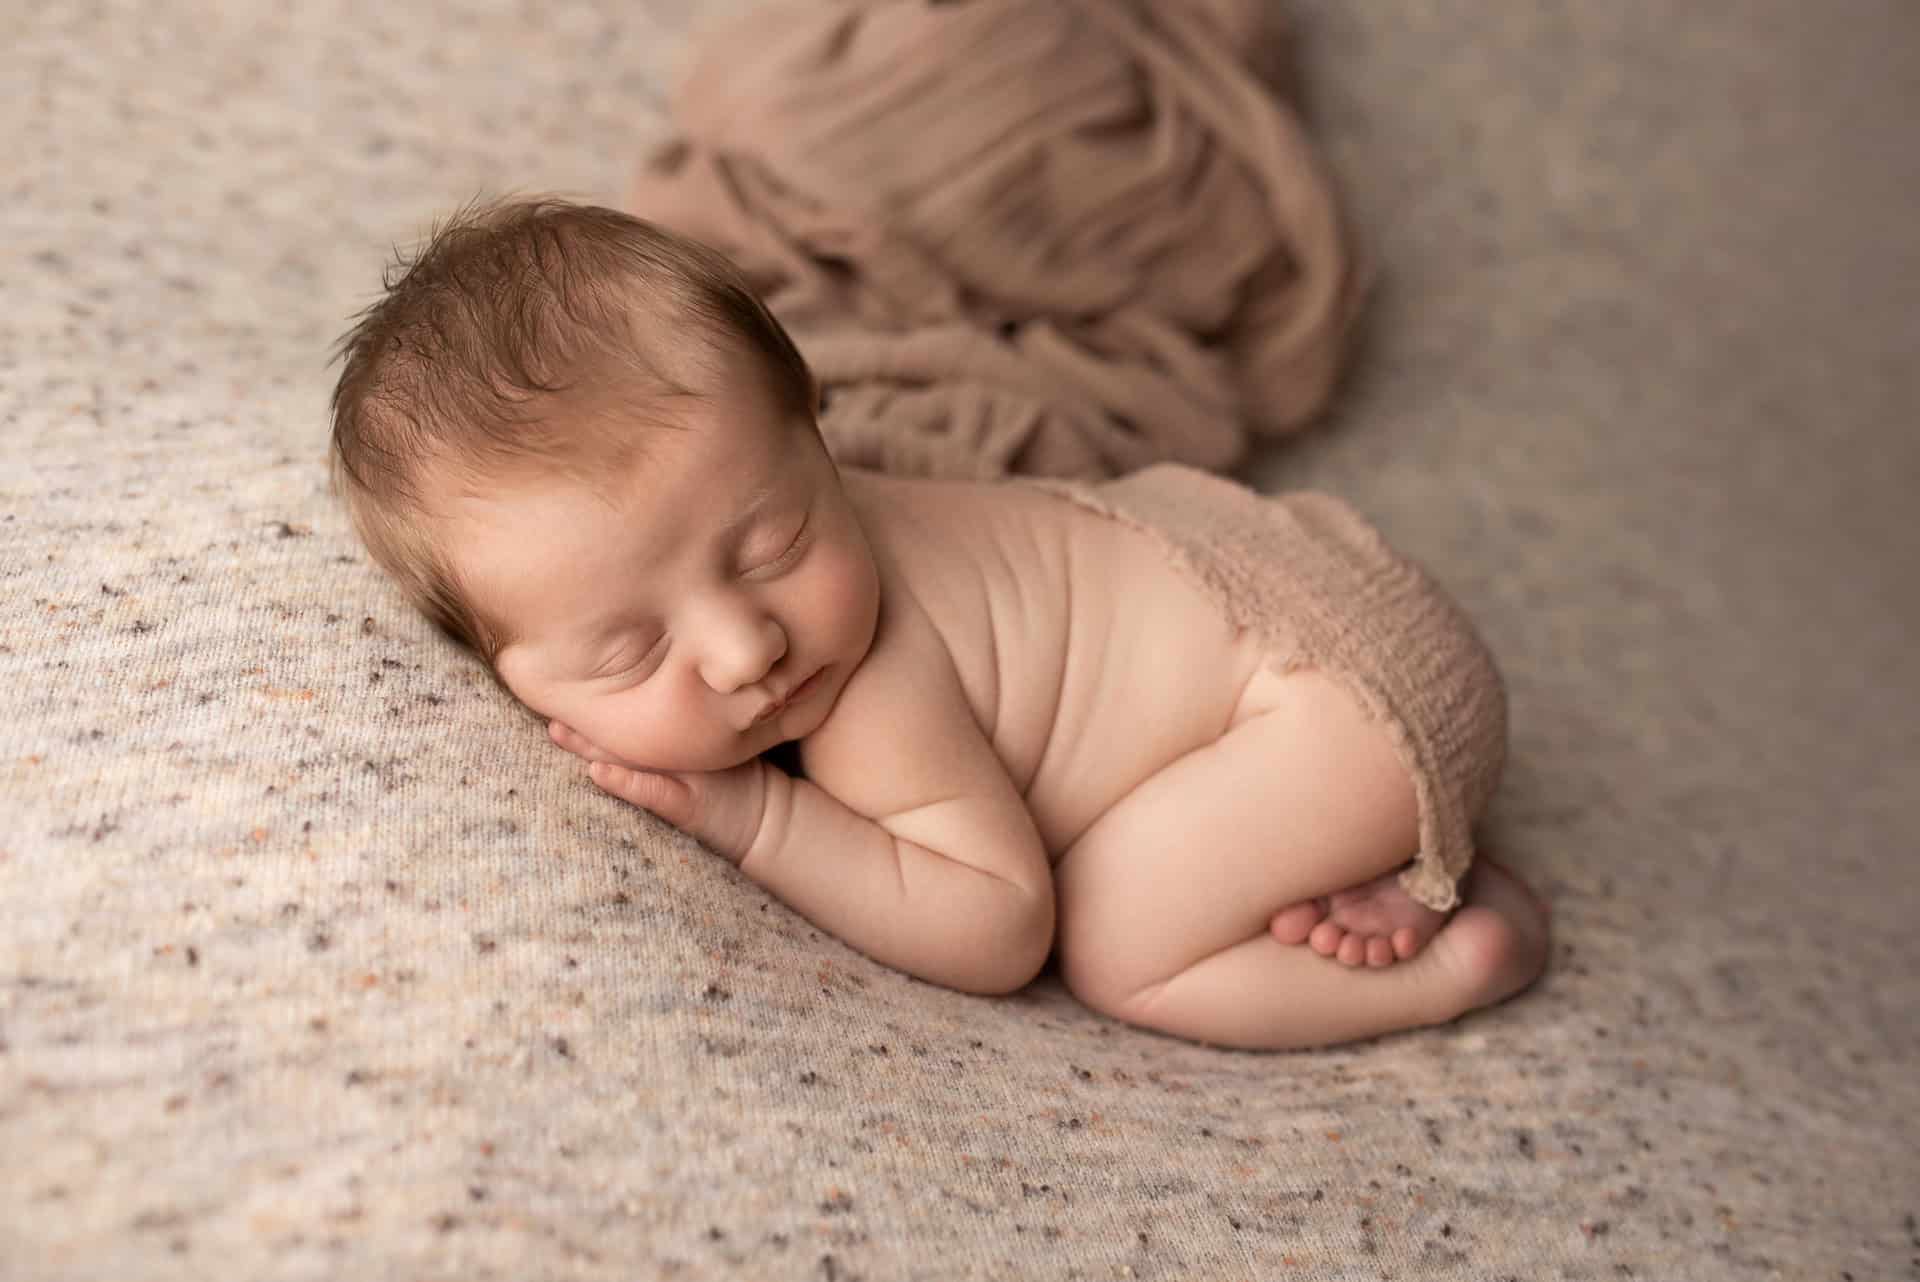 A newborn baby sleeping on a brown blanket.